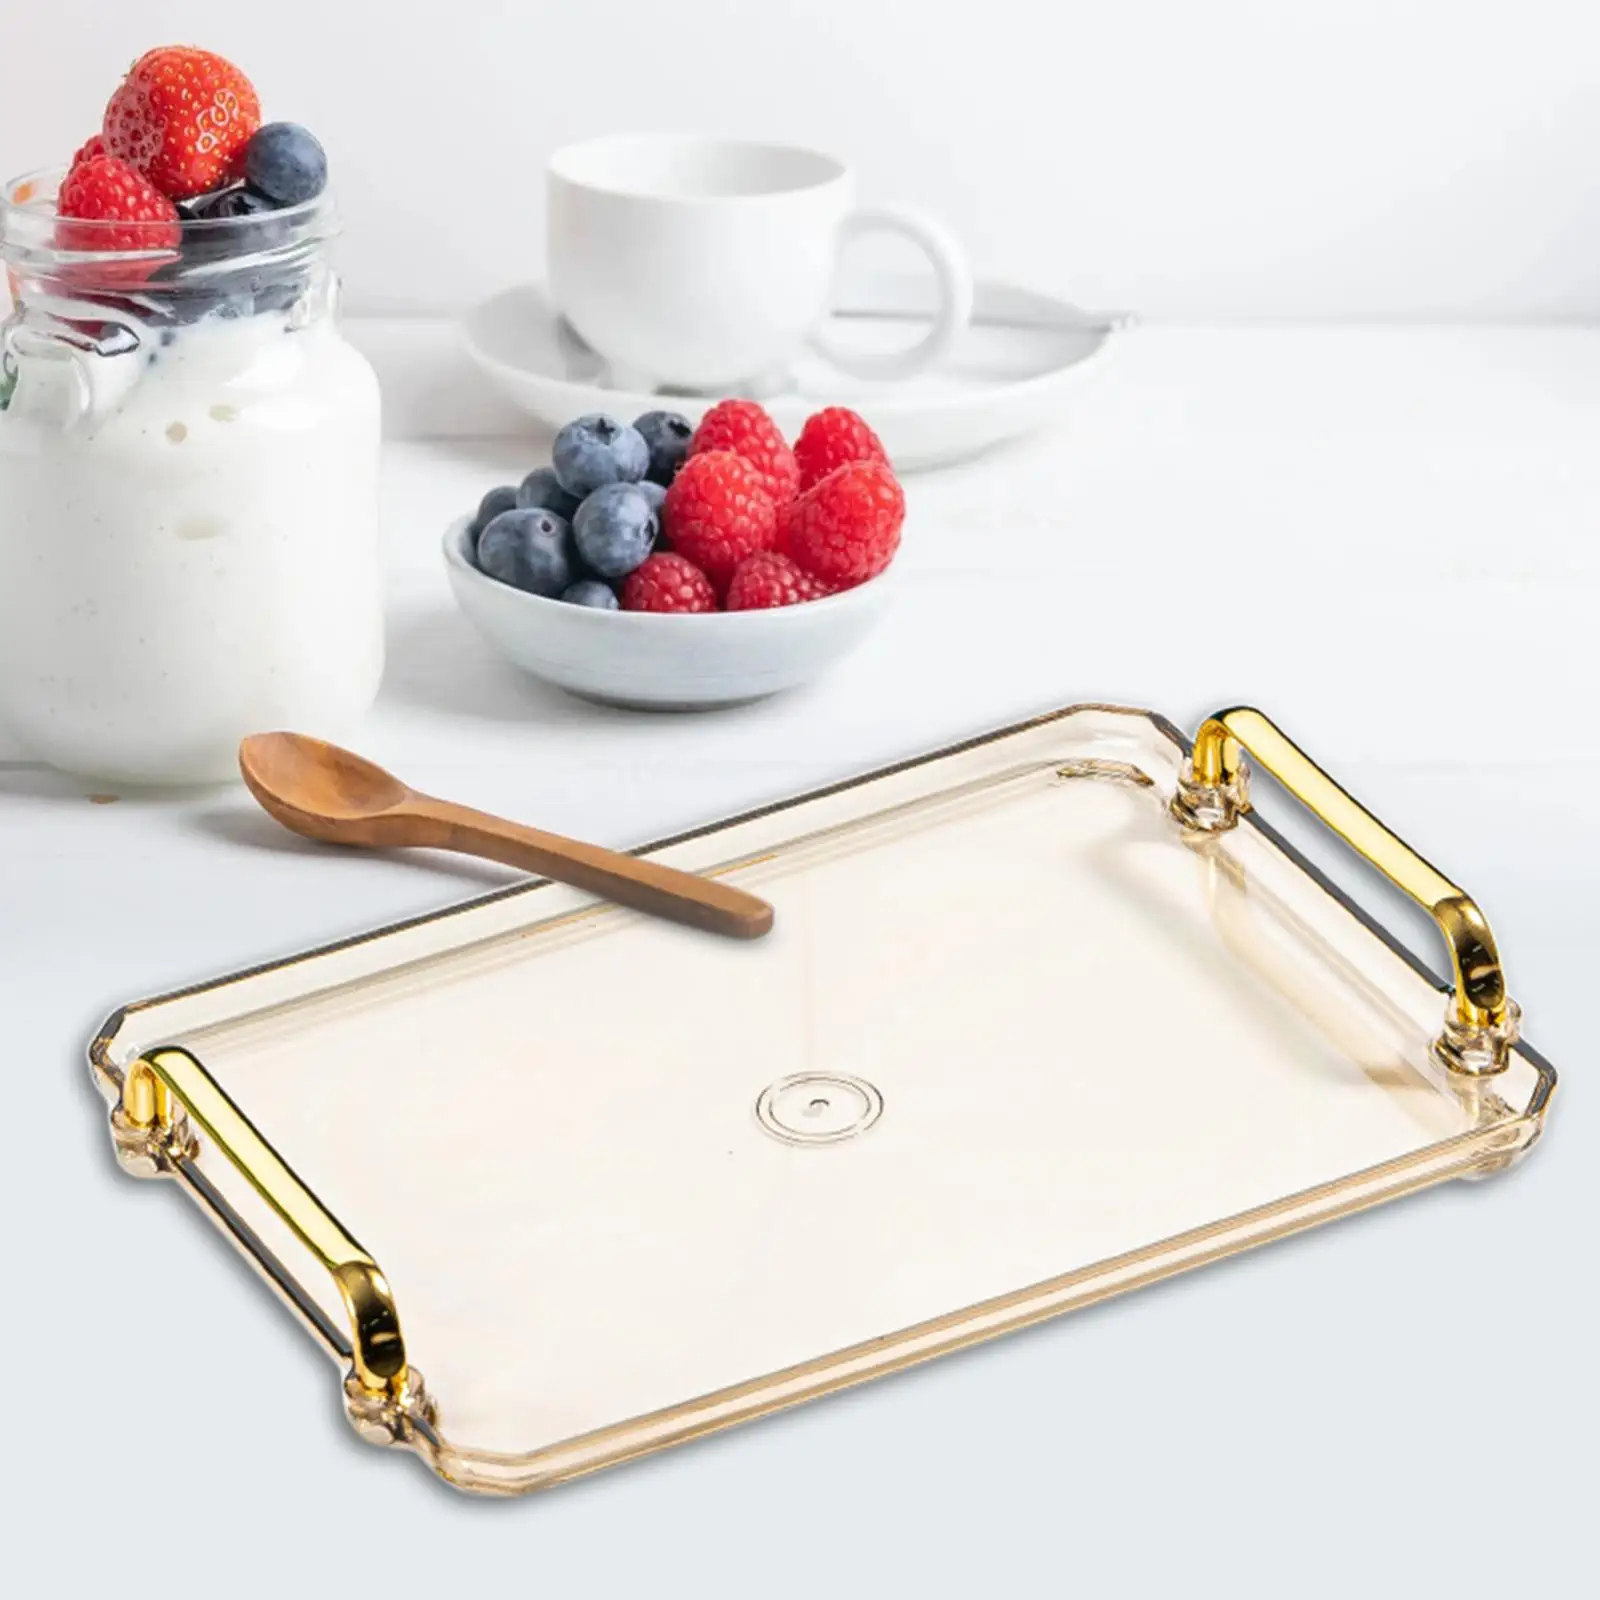 Modern Elegant Fruit Dessert Tray with Handles Restaurant Serving Tray for Table